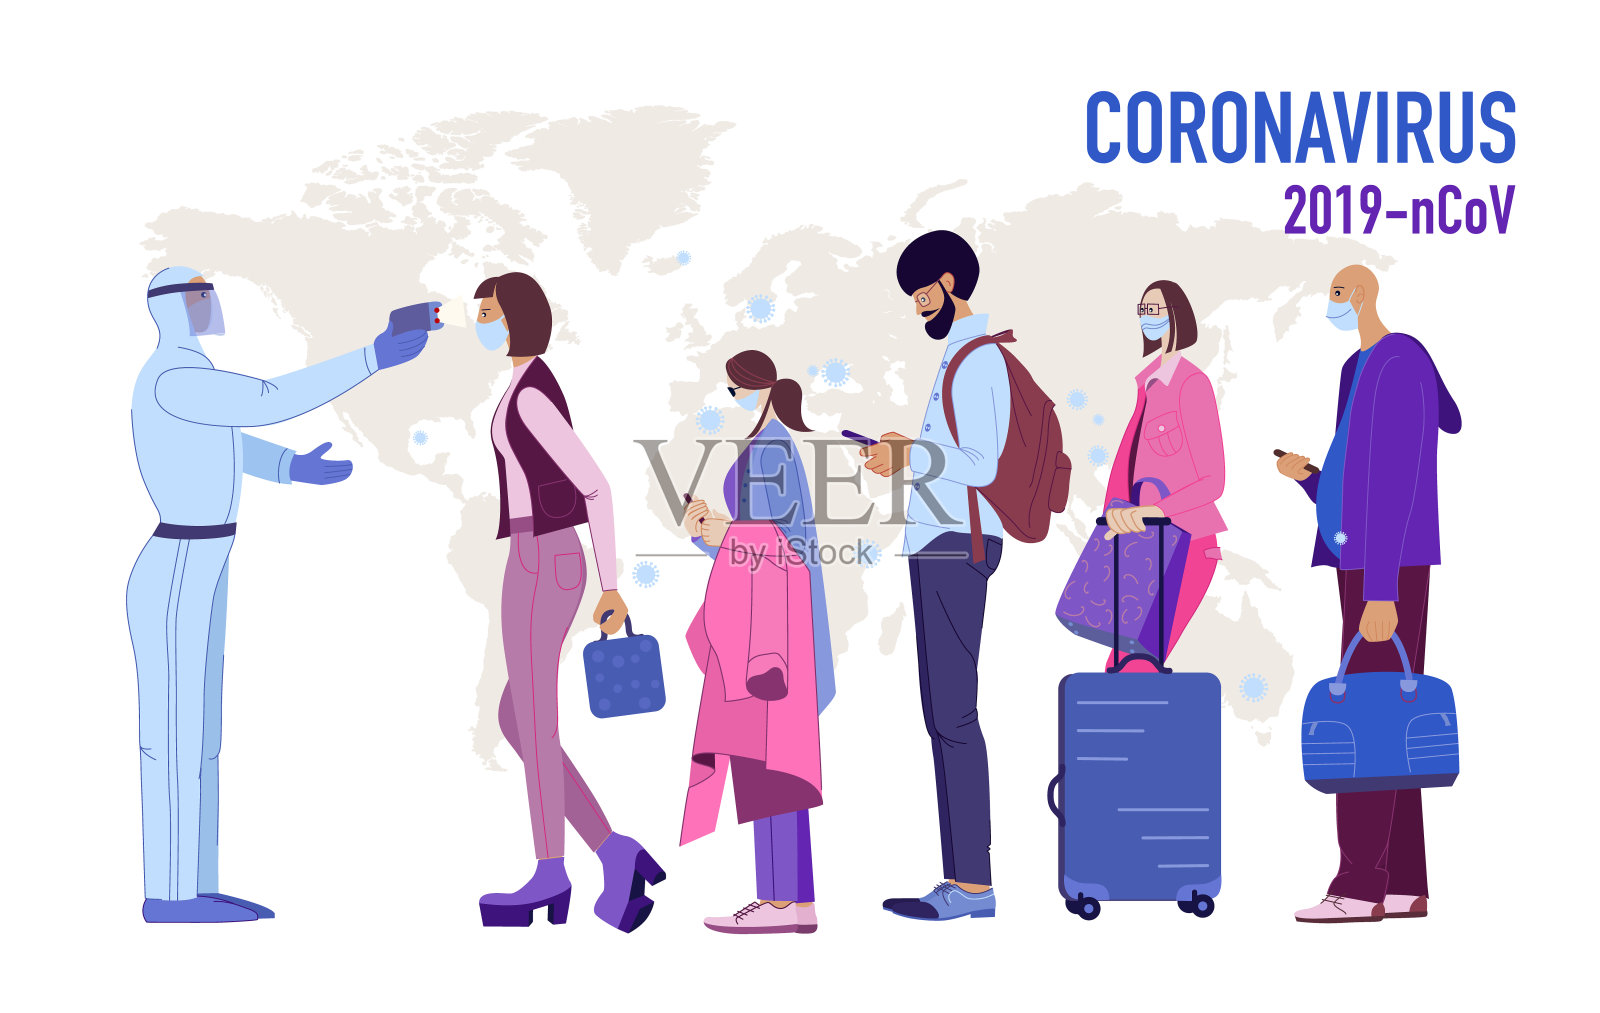 COVID-19疫情概念说明。多种族的人戴着医用口罩排队。乘客被测量温度。新型冠状病毒(2019 - ncov)。插画图片素材